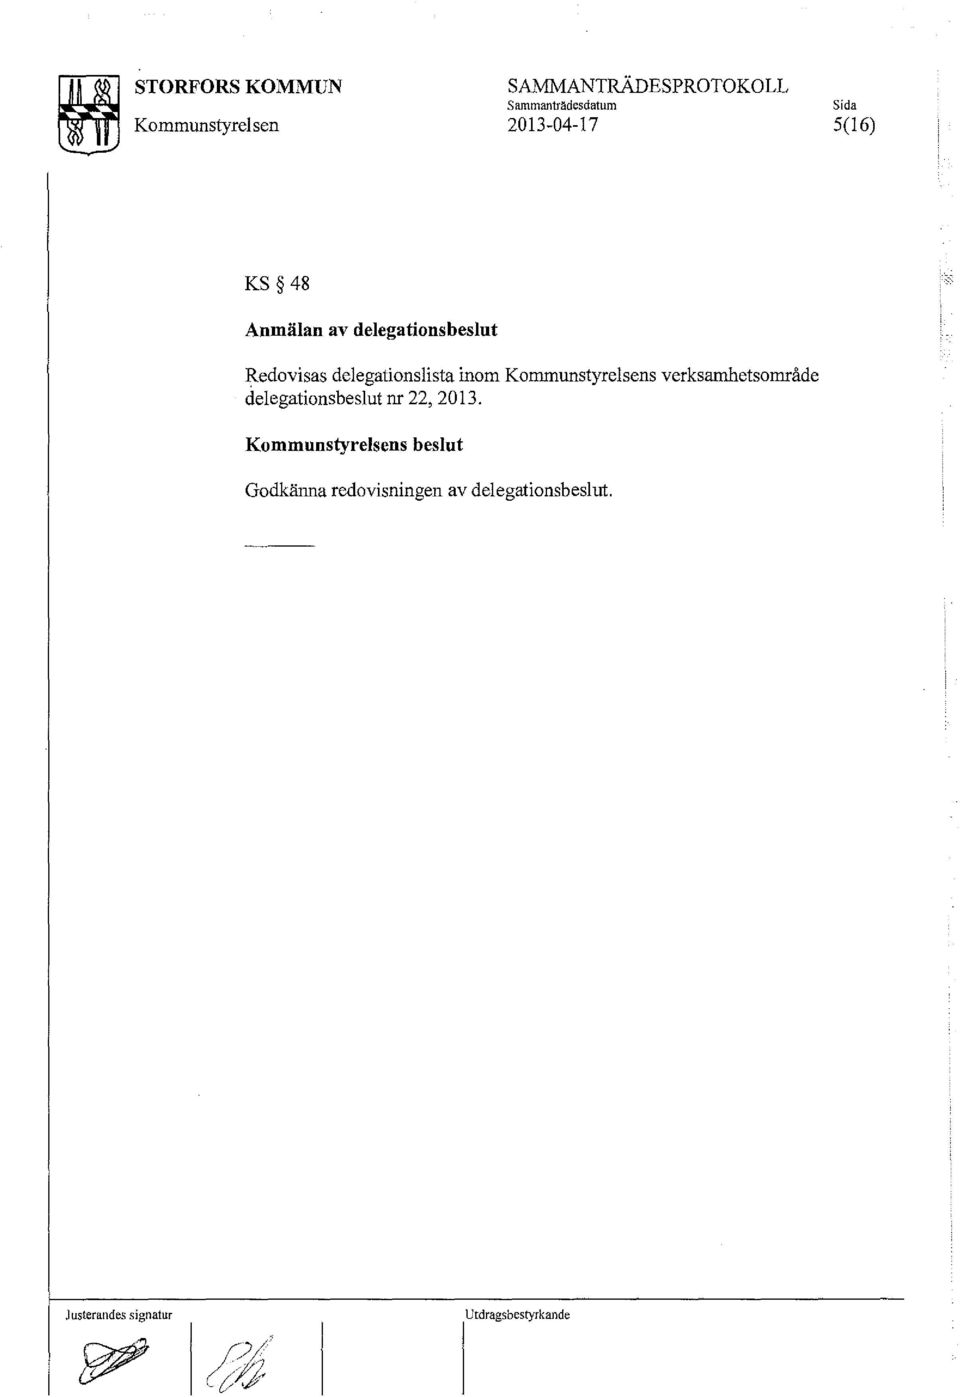 Kommunstyrelsens verksamhetsområde delegationsbeslut nr 22,2013.